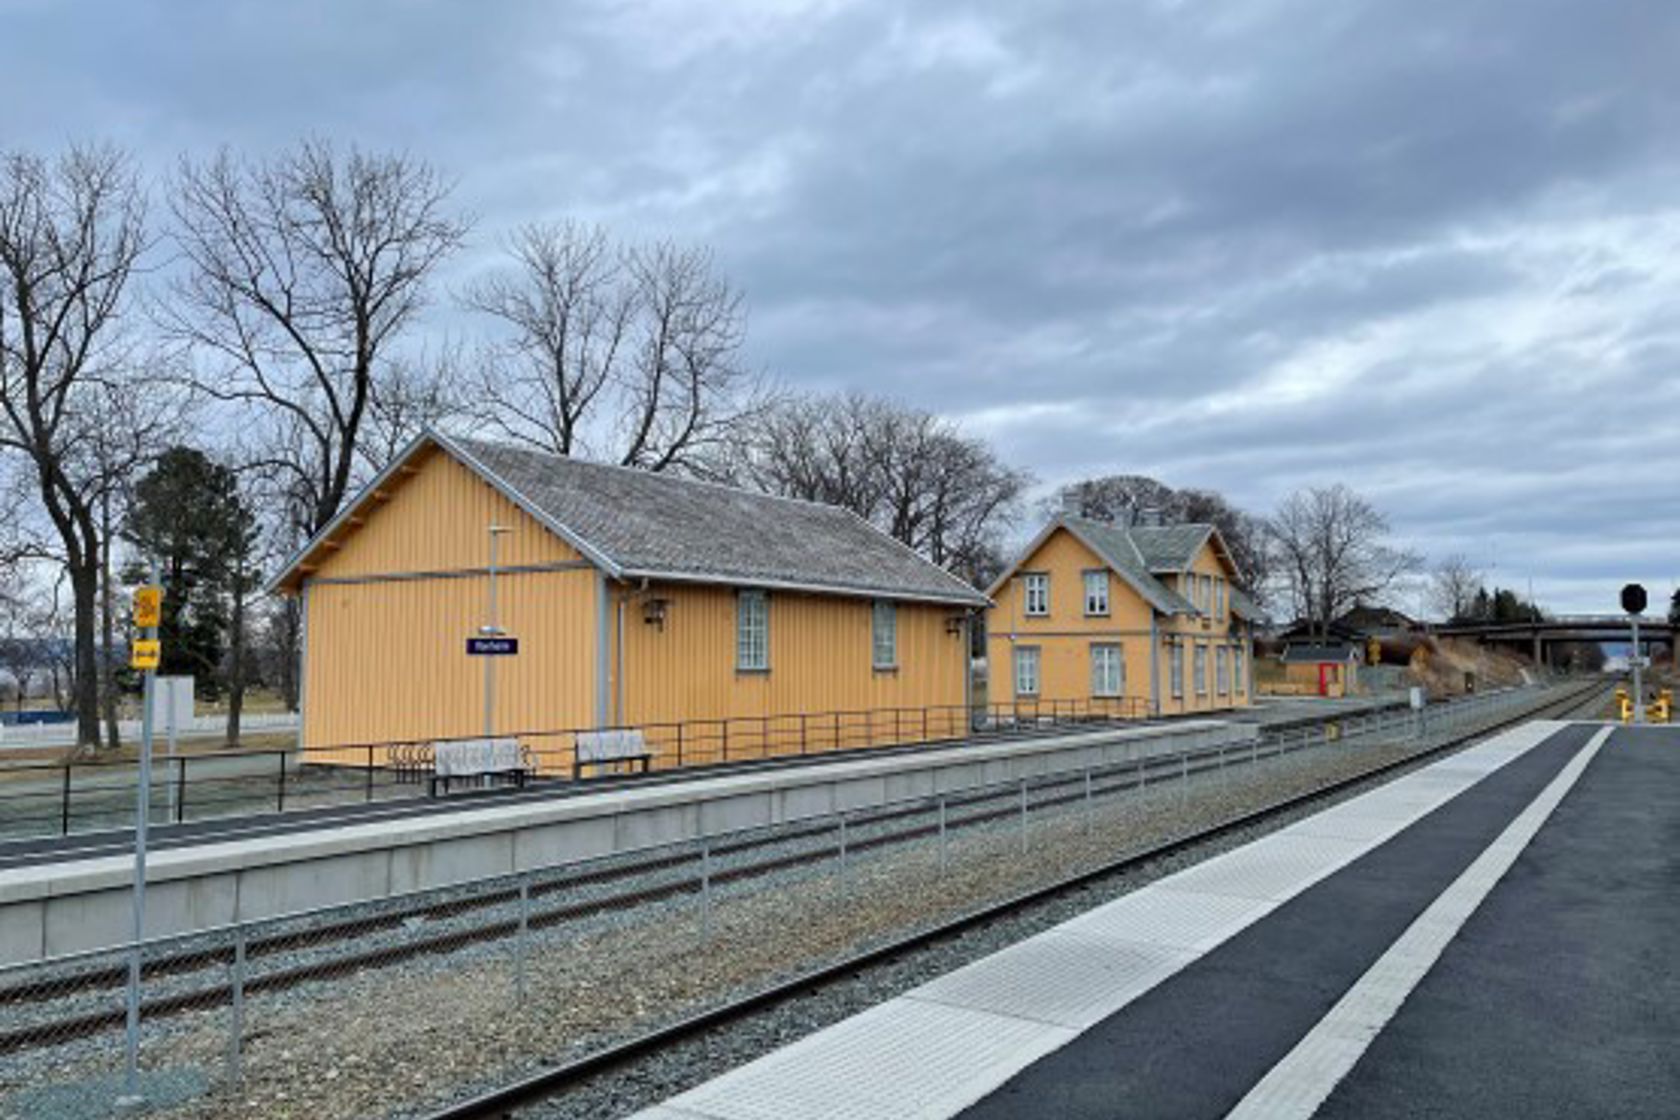 Exterior view of Ranheim station